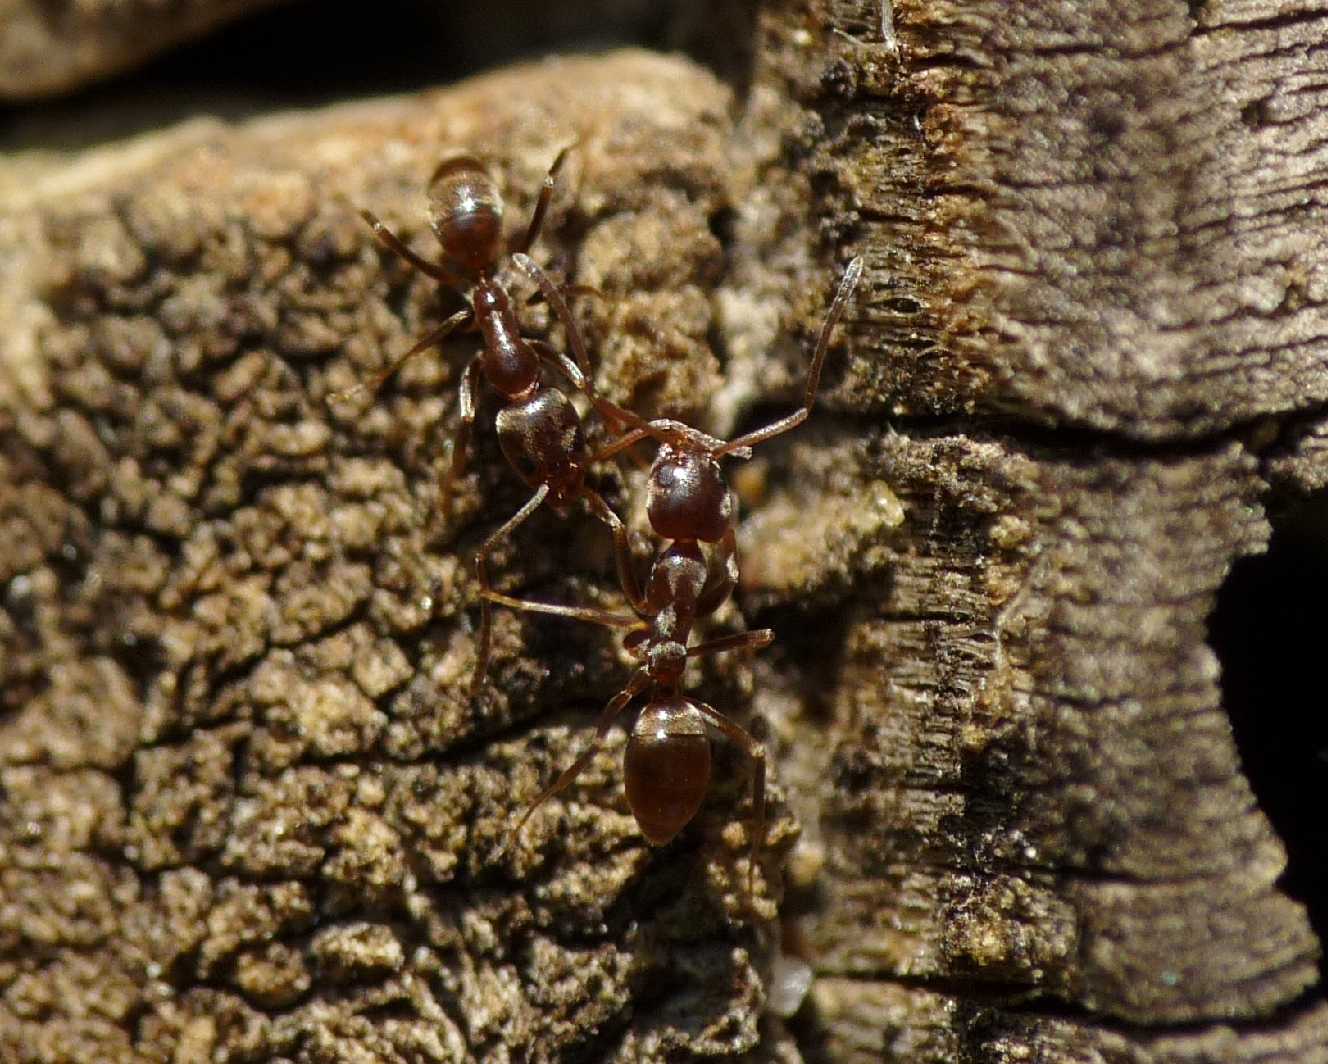 Linepithema humile (Formicidae)